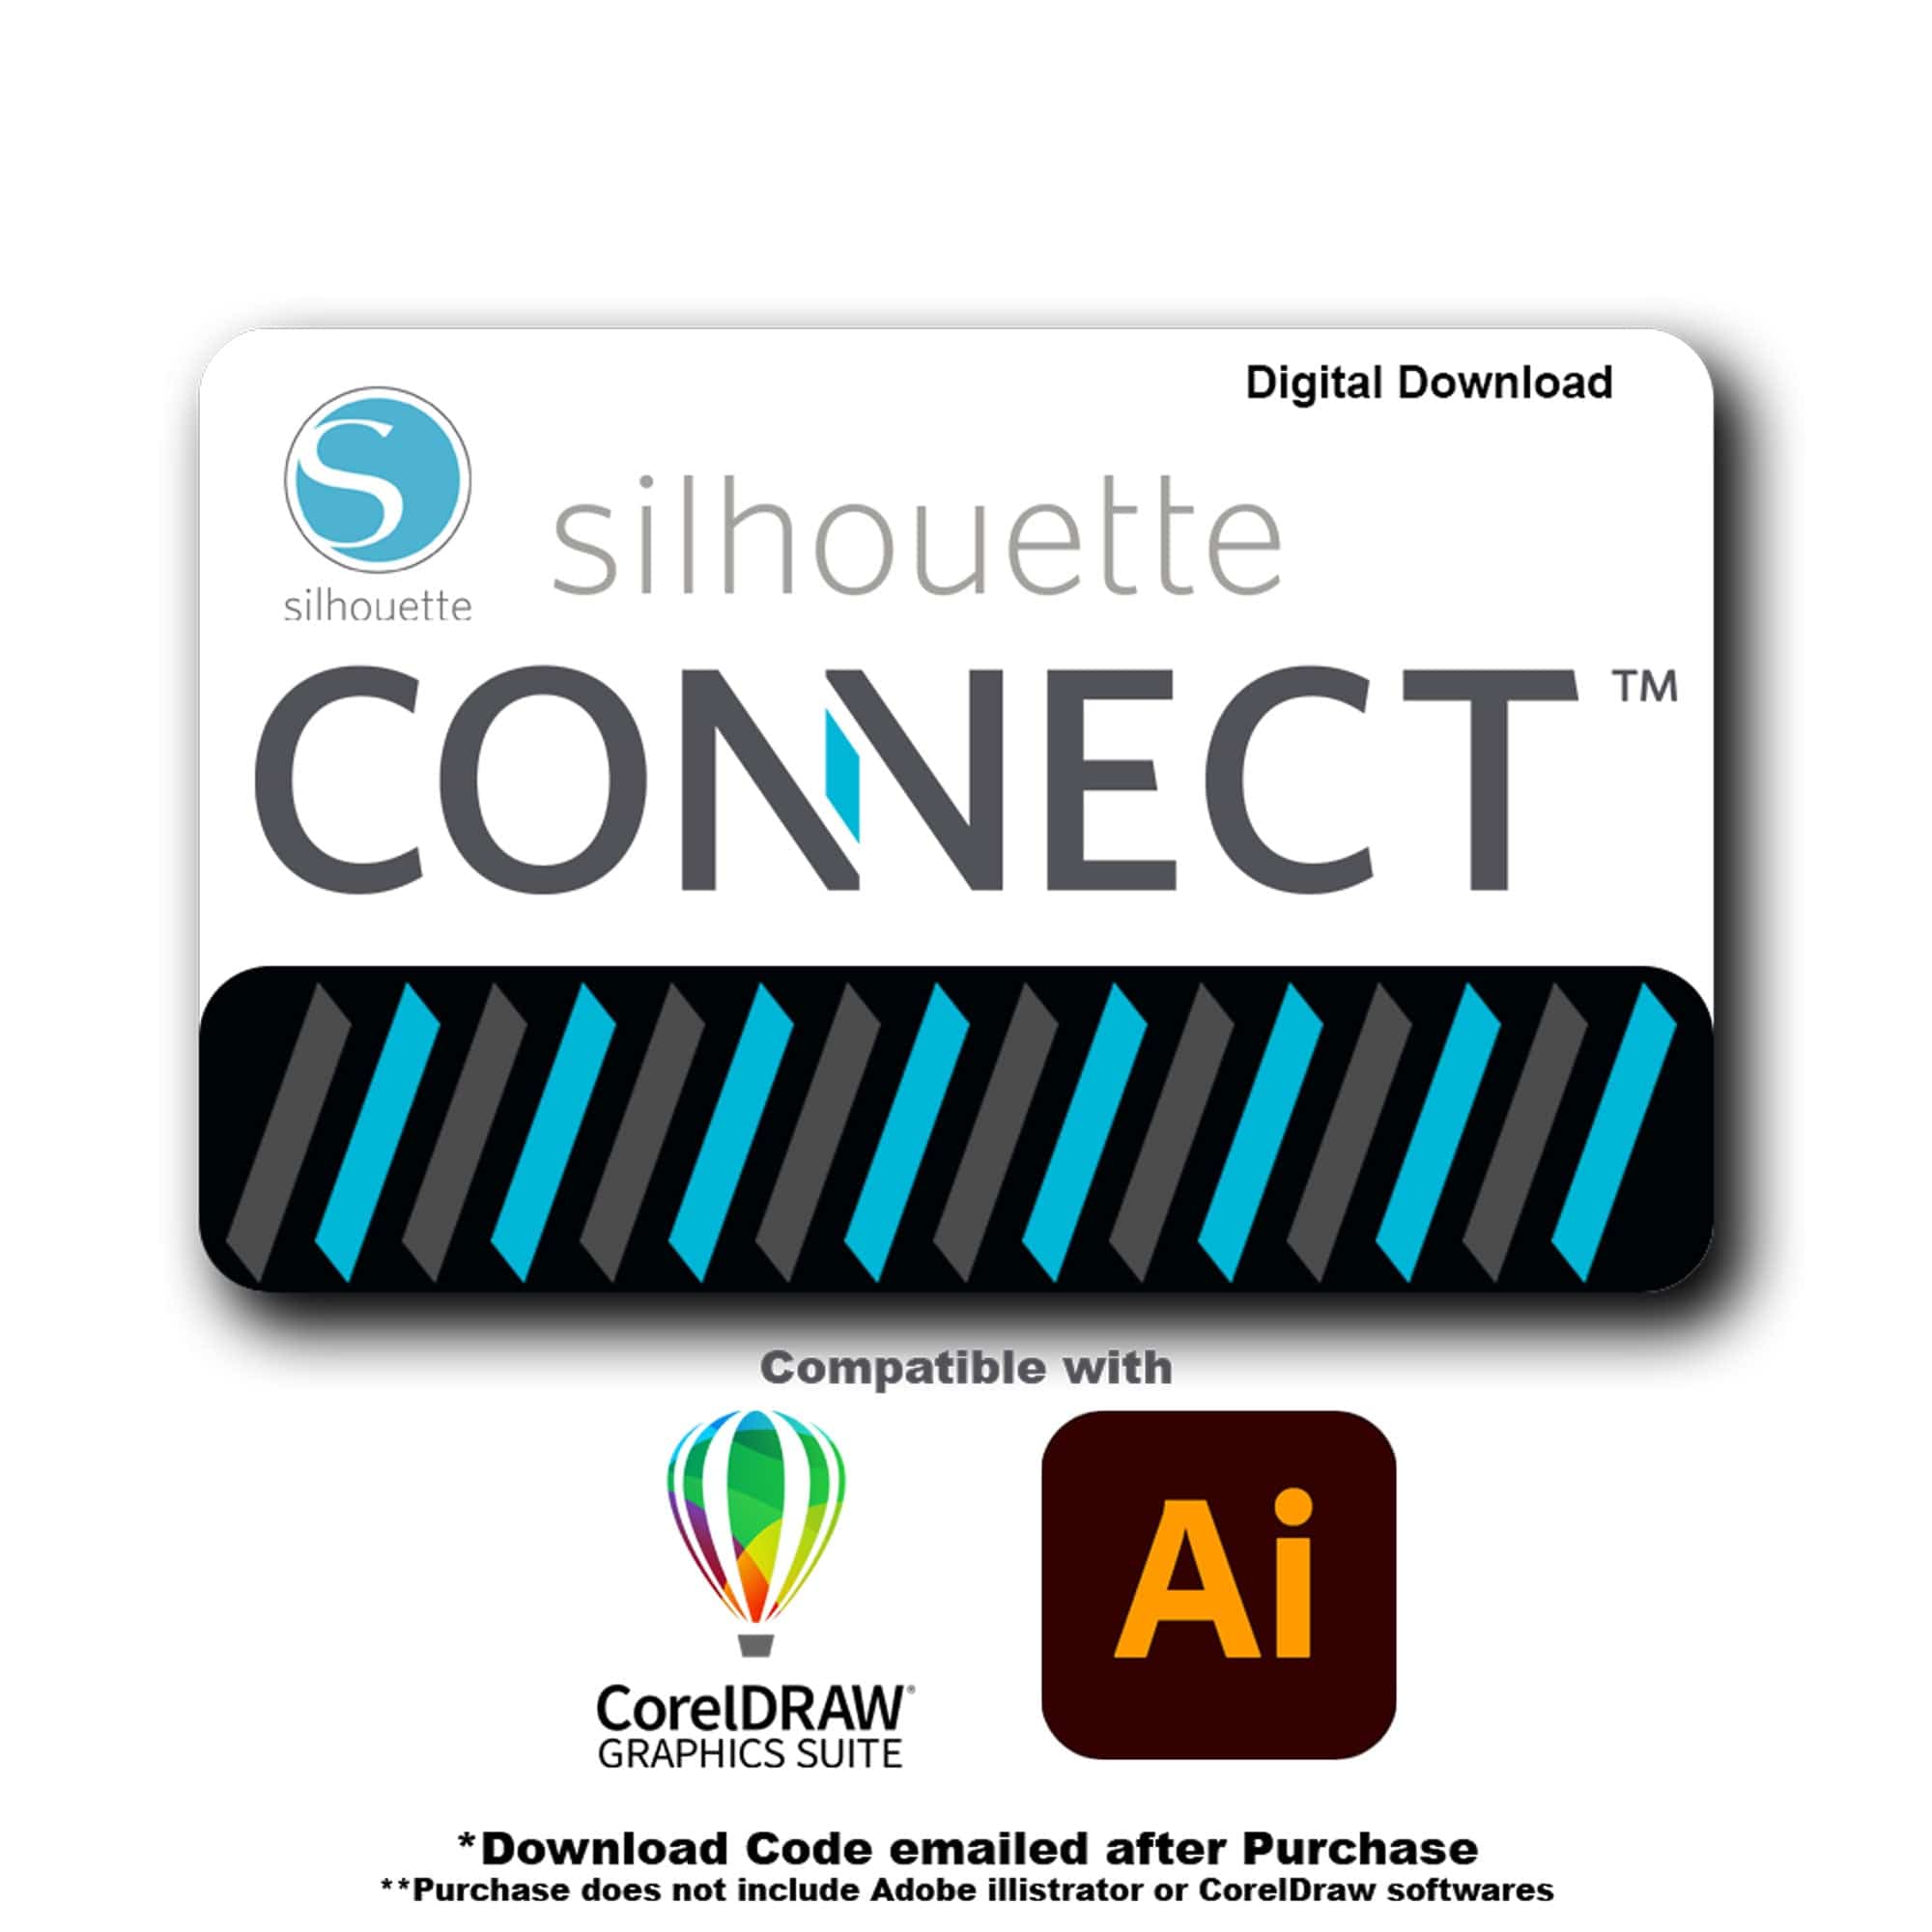 Silhouette America Software & Downloads Silhouette Connect - Plugin for Adobe Illustrator and CorelDRAW (Download)